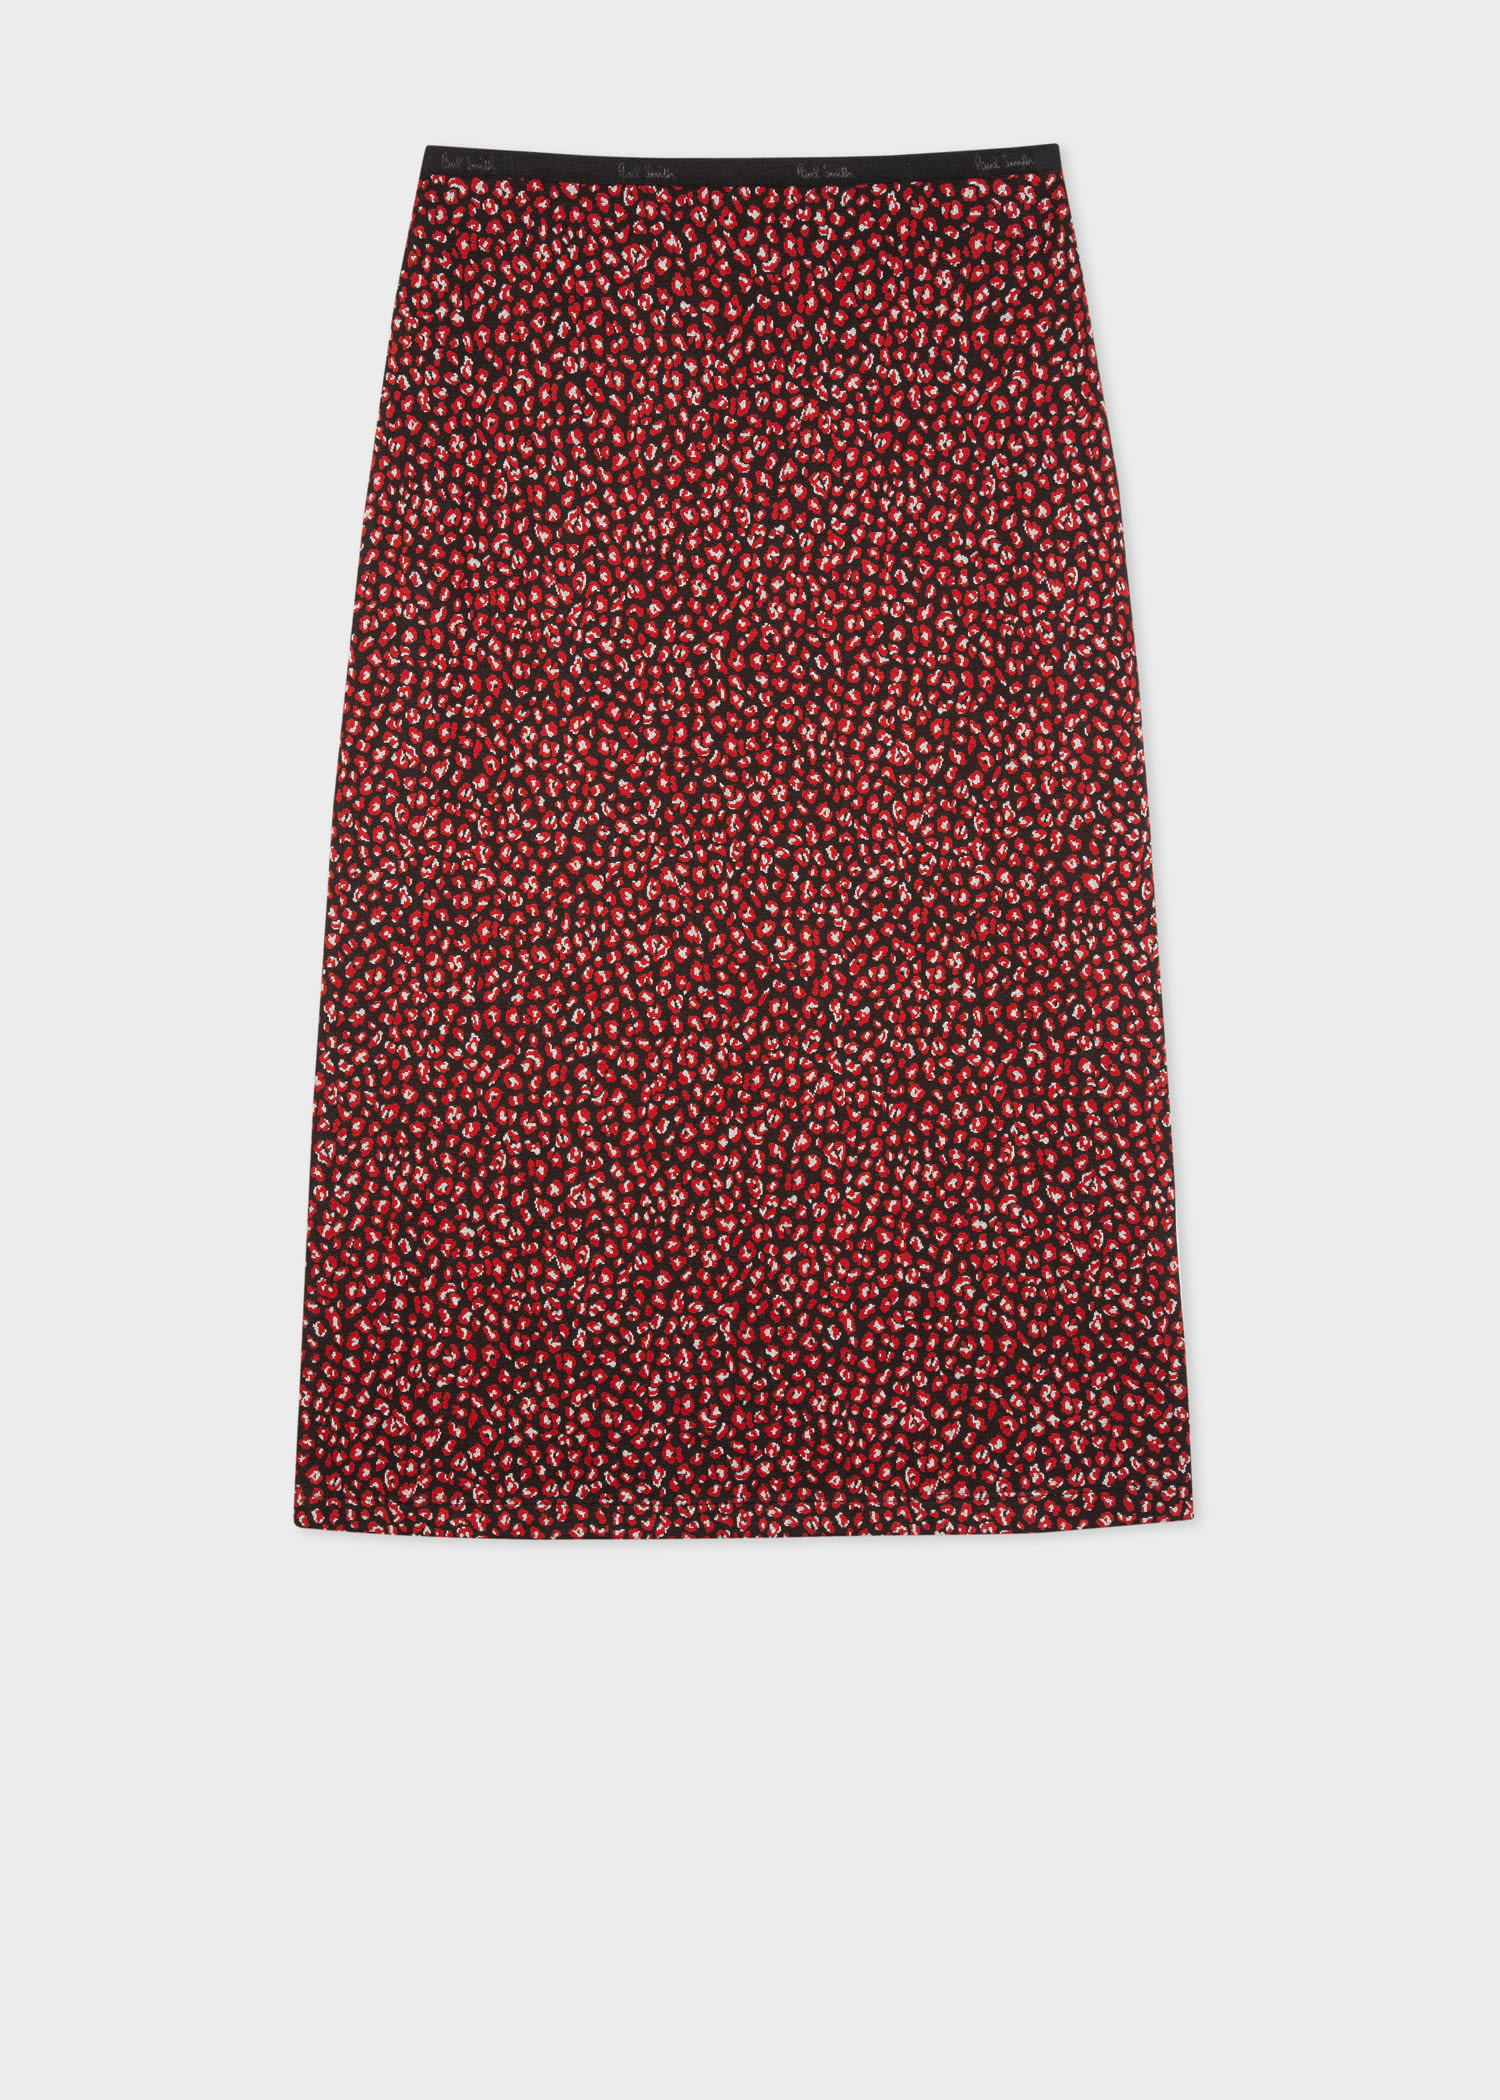 Women's Leopard Jacquard Pencil Skirt 